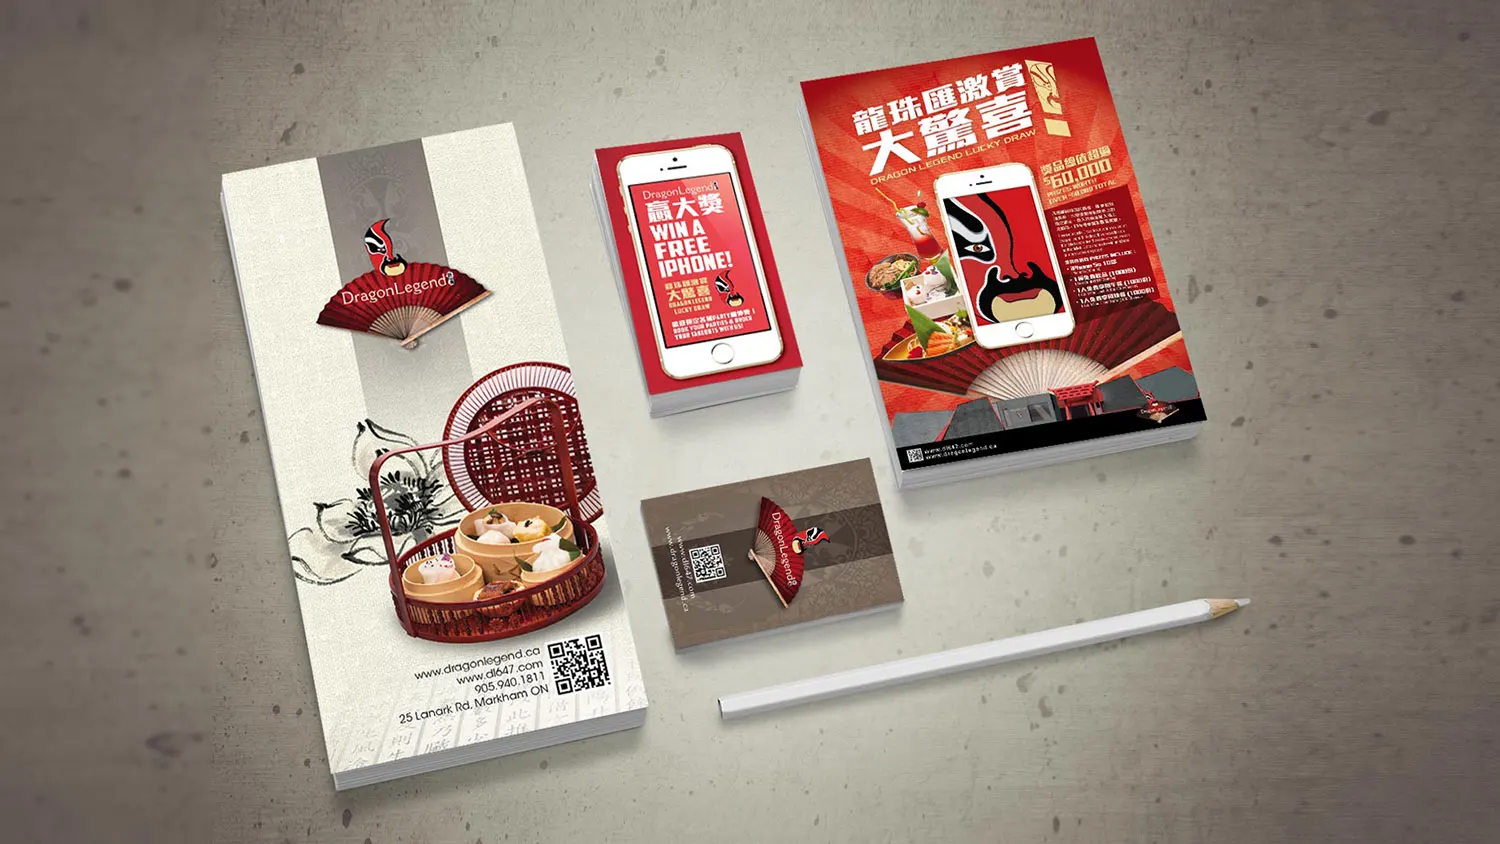 Graphic design project for Dragon Legend 龍珠匯. Designed stationeries for restaurant promotion